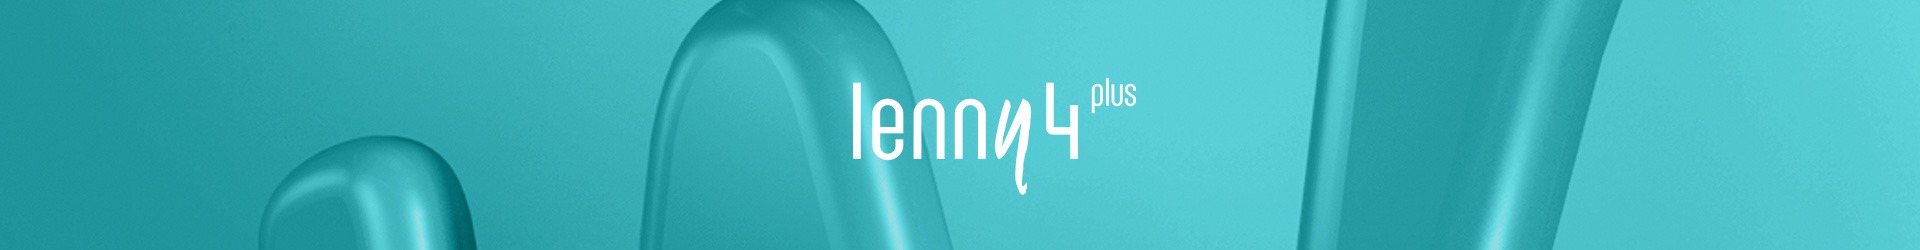 Lenny4 Plus